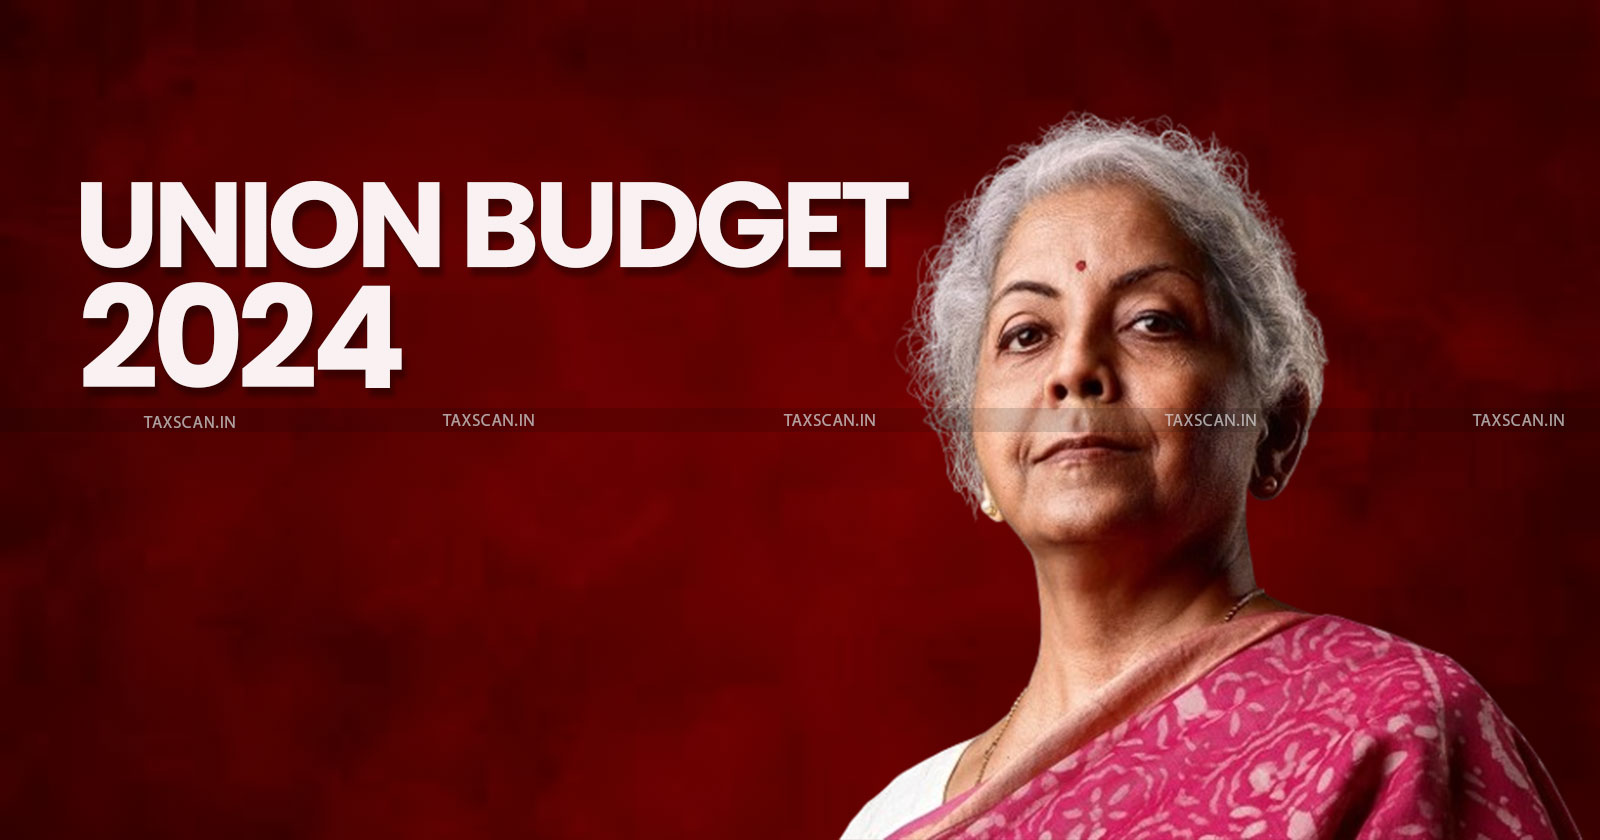 Union Budget 2024 - Income Tax Bar Jalandhar - Pre Budget Memorandum - Finance Minister - Budget 2024 - TAXSCAN